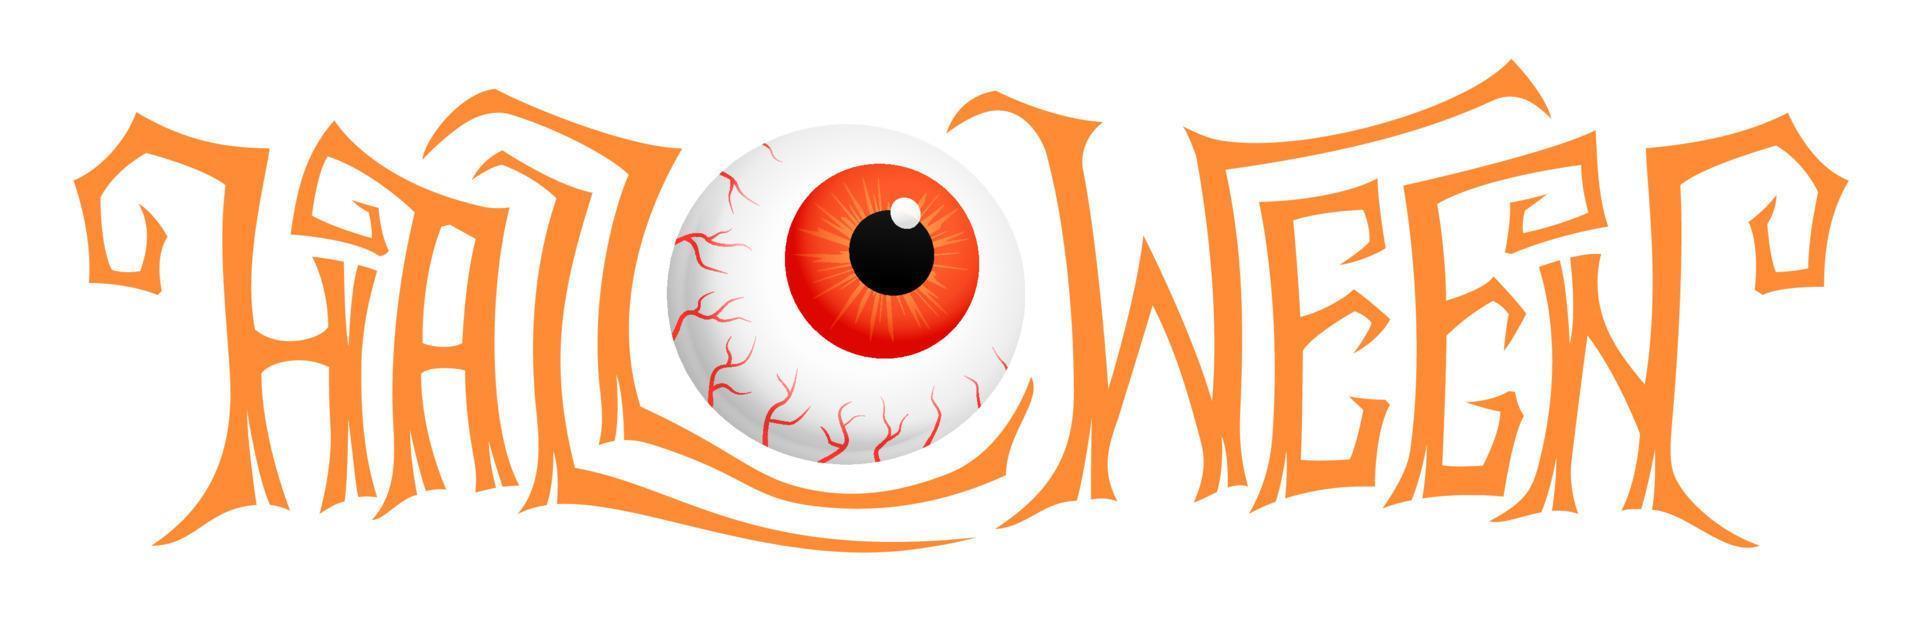 letras creativas de halloween con globo ocular realista. banner vectorial horizontal para la fiesta de halloween. vector